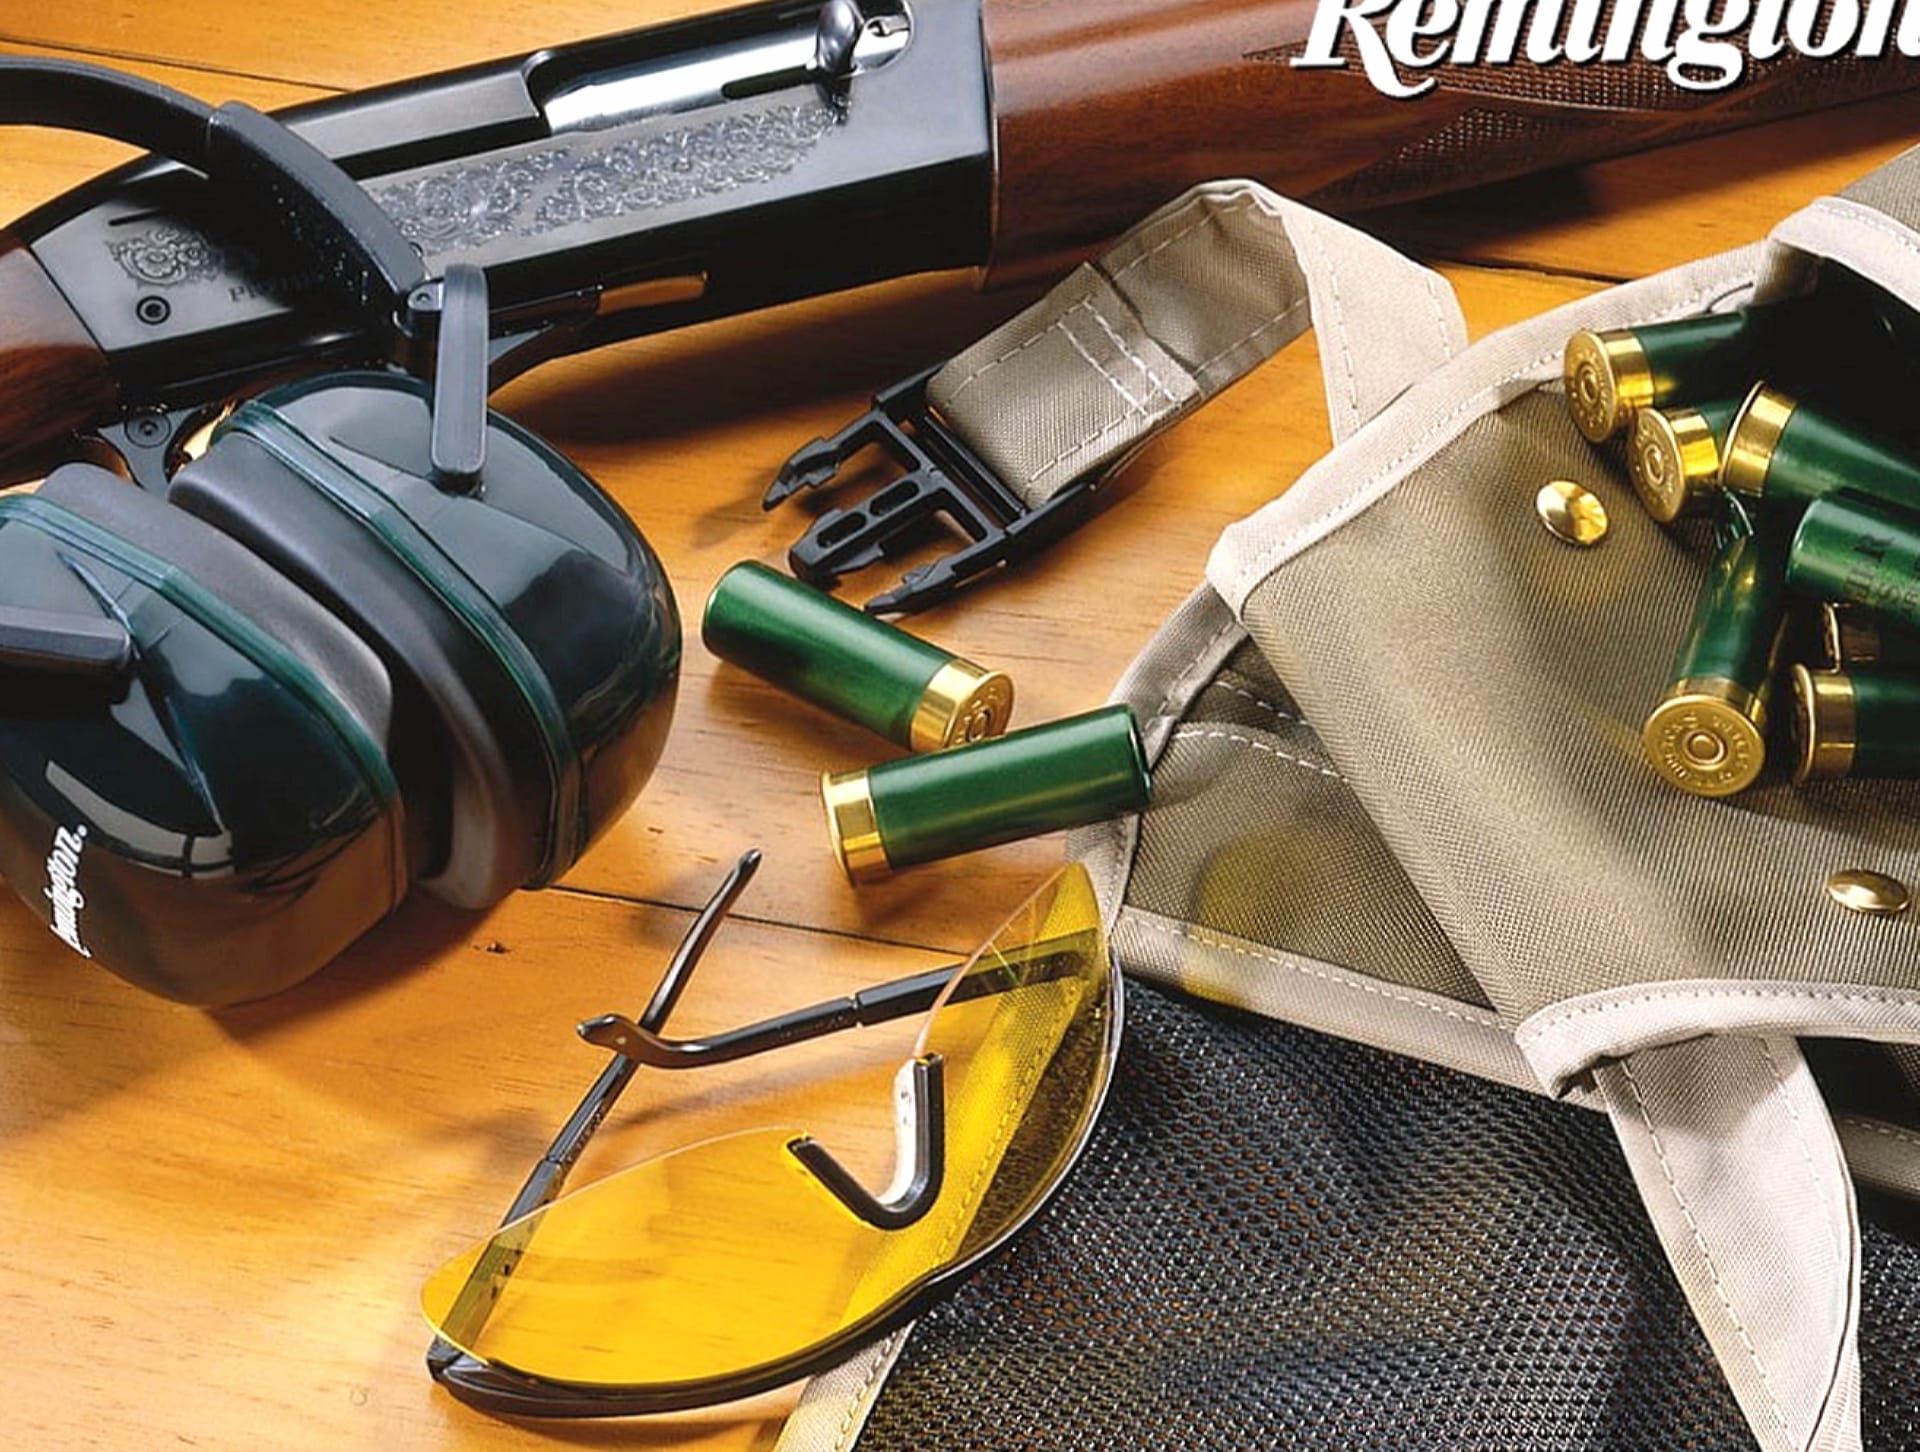 Remington Shotgun wallpapers HD quality